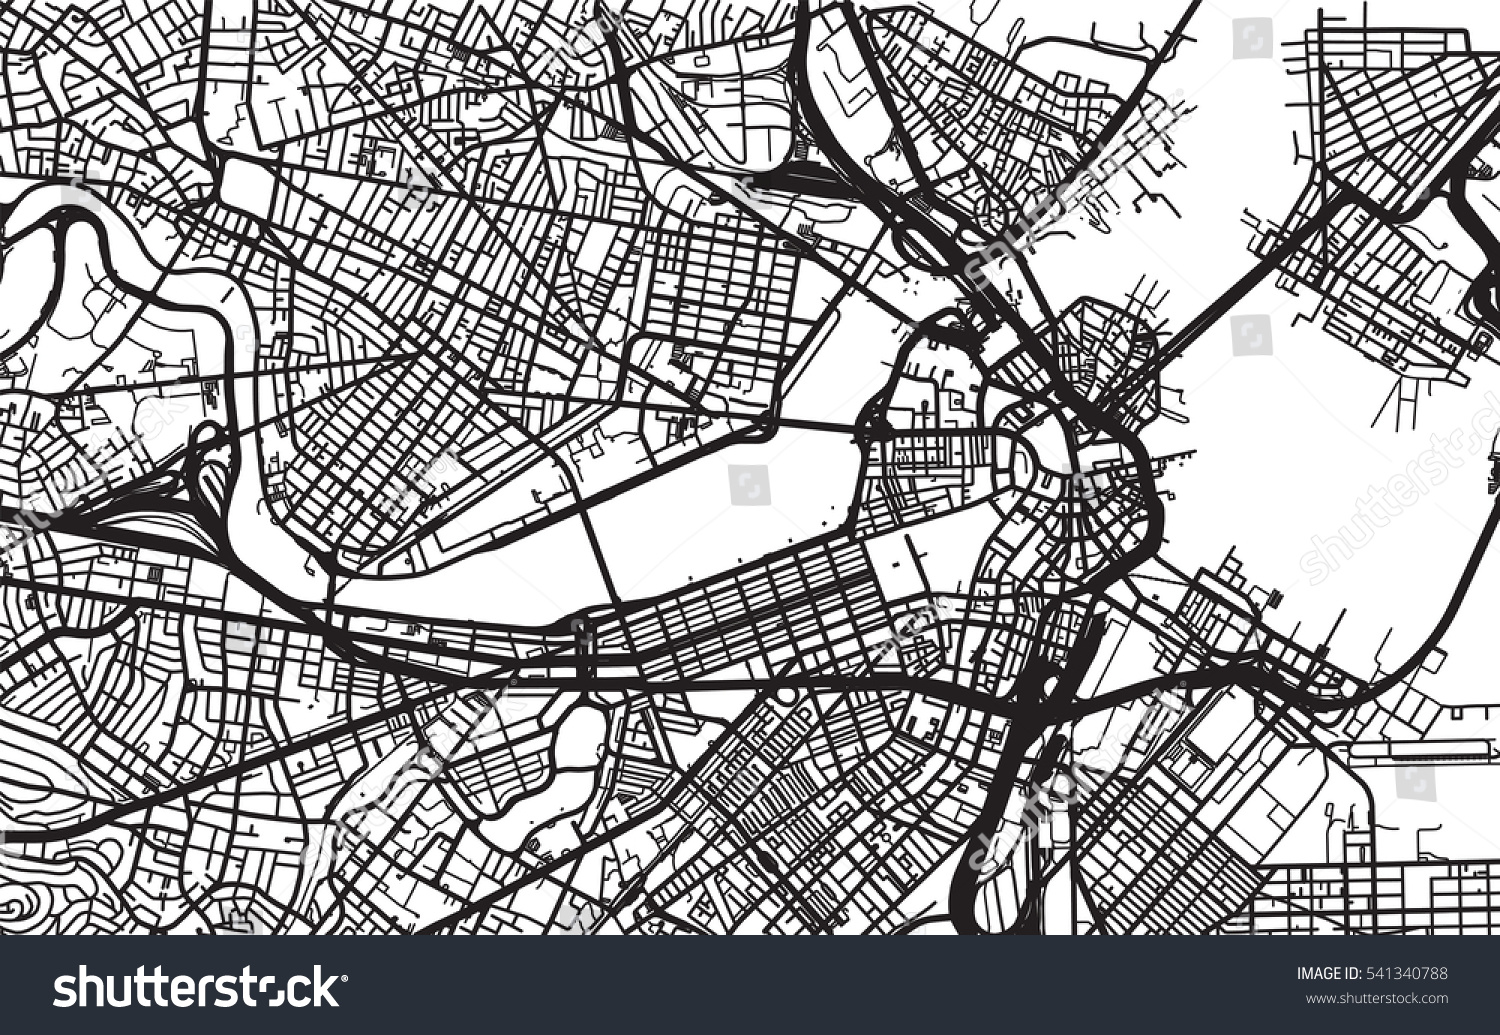 SVG of Urban city map of Boston, USA svg